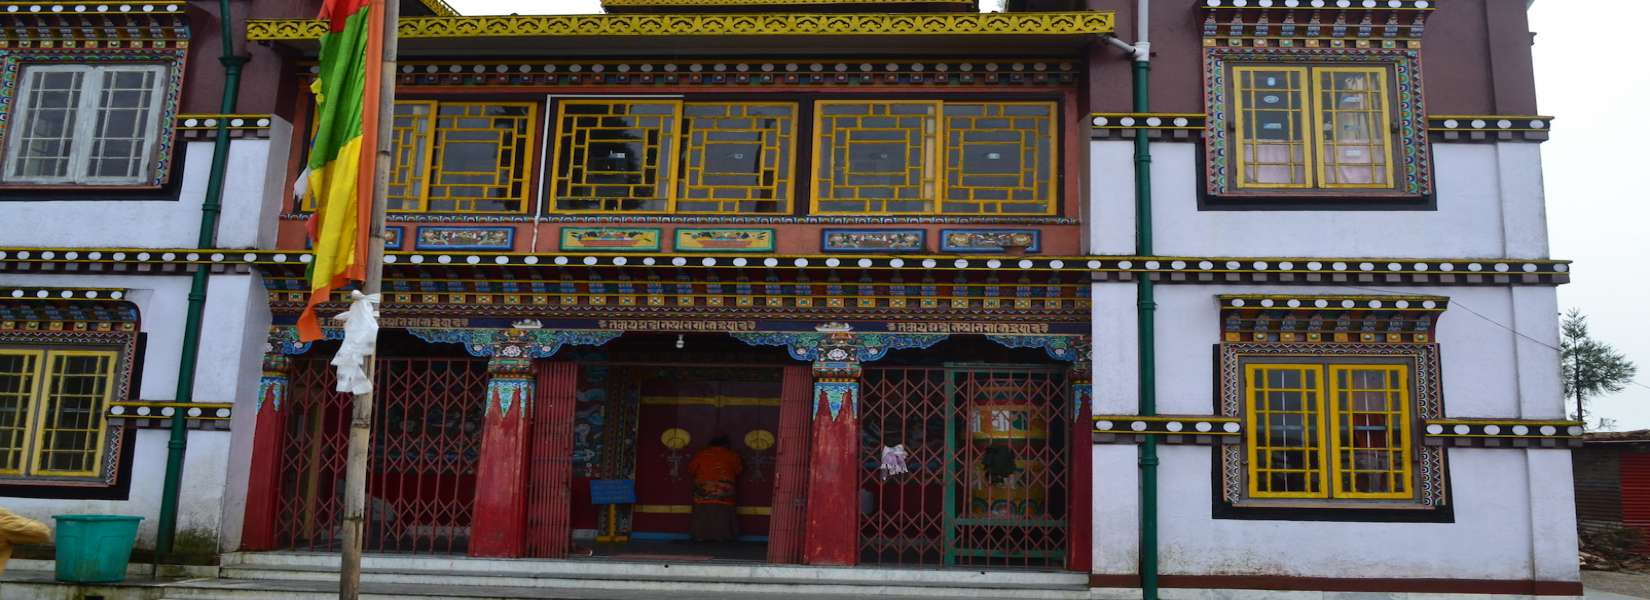 Bhutia Busty Monastery in Darjeeling